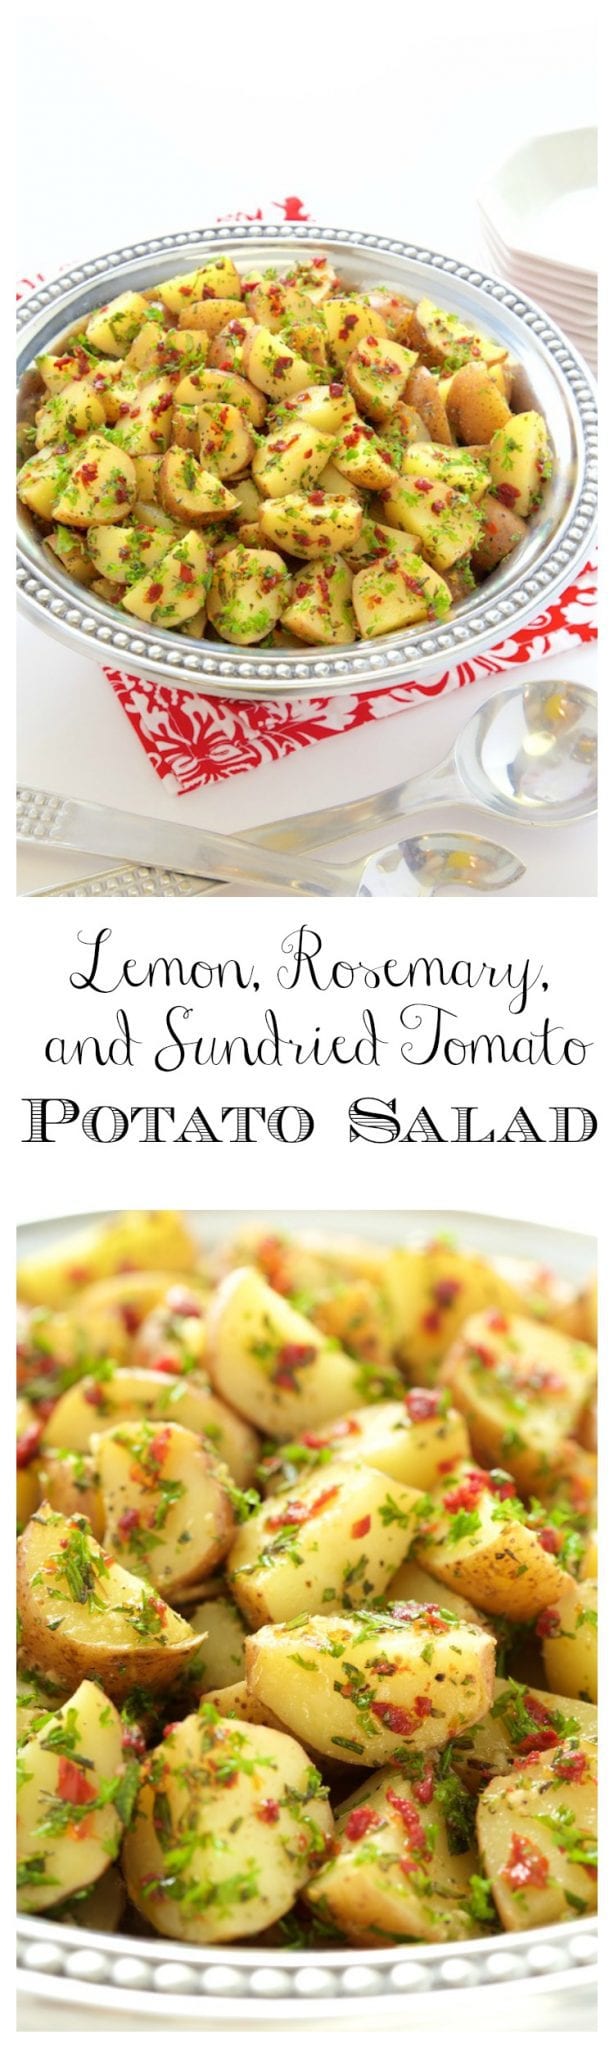 Lemon, Rosemary and Sundried Tomato Potato Salad - a simple, delicious, no Mayo potato salad that everyone loves!